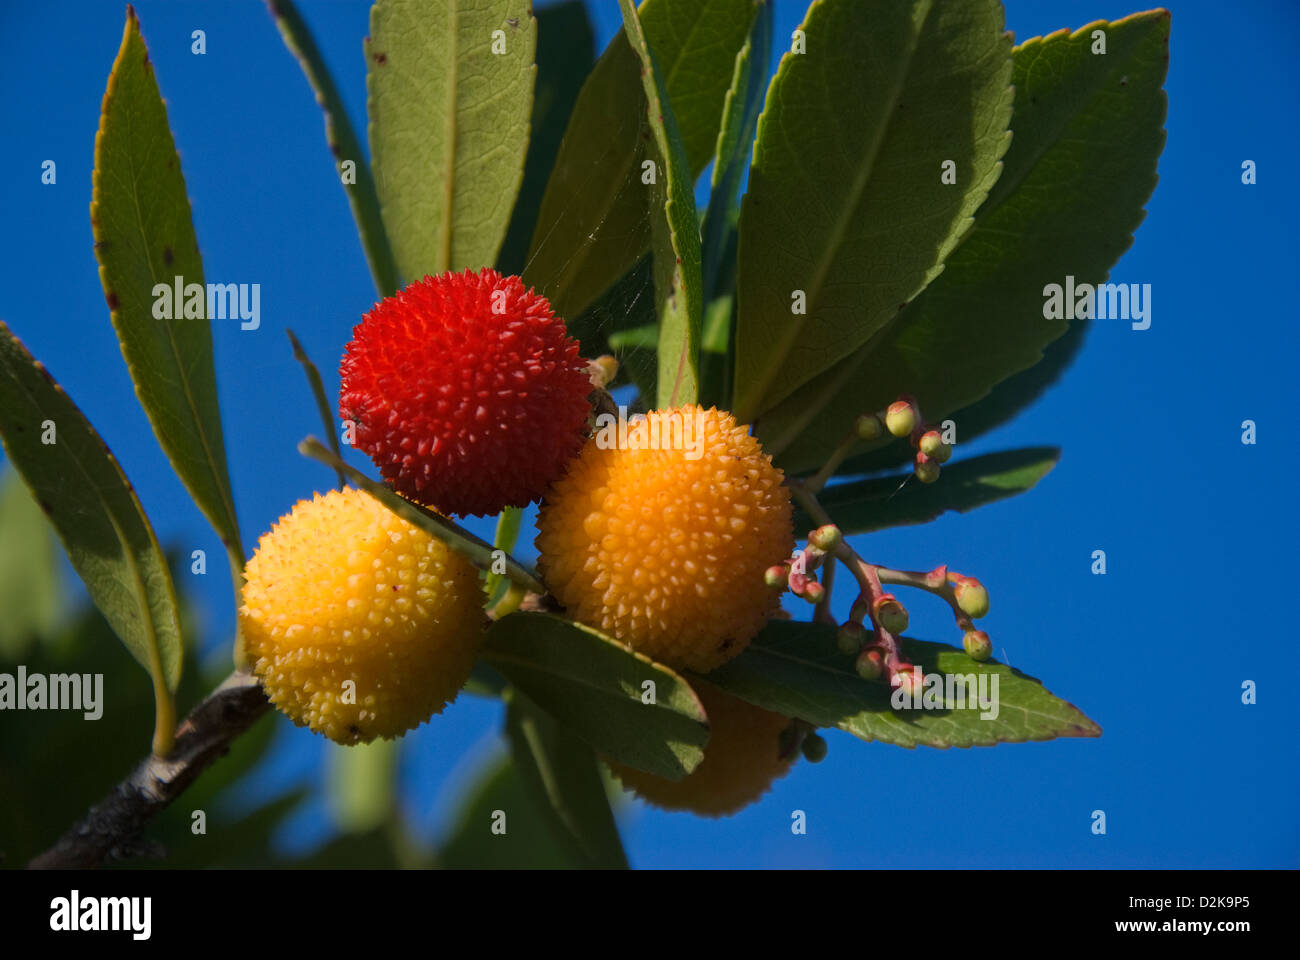 Fruits of the Strawberry Tree (Arbutus unedo) Stock Photo